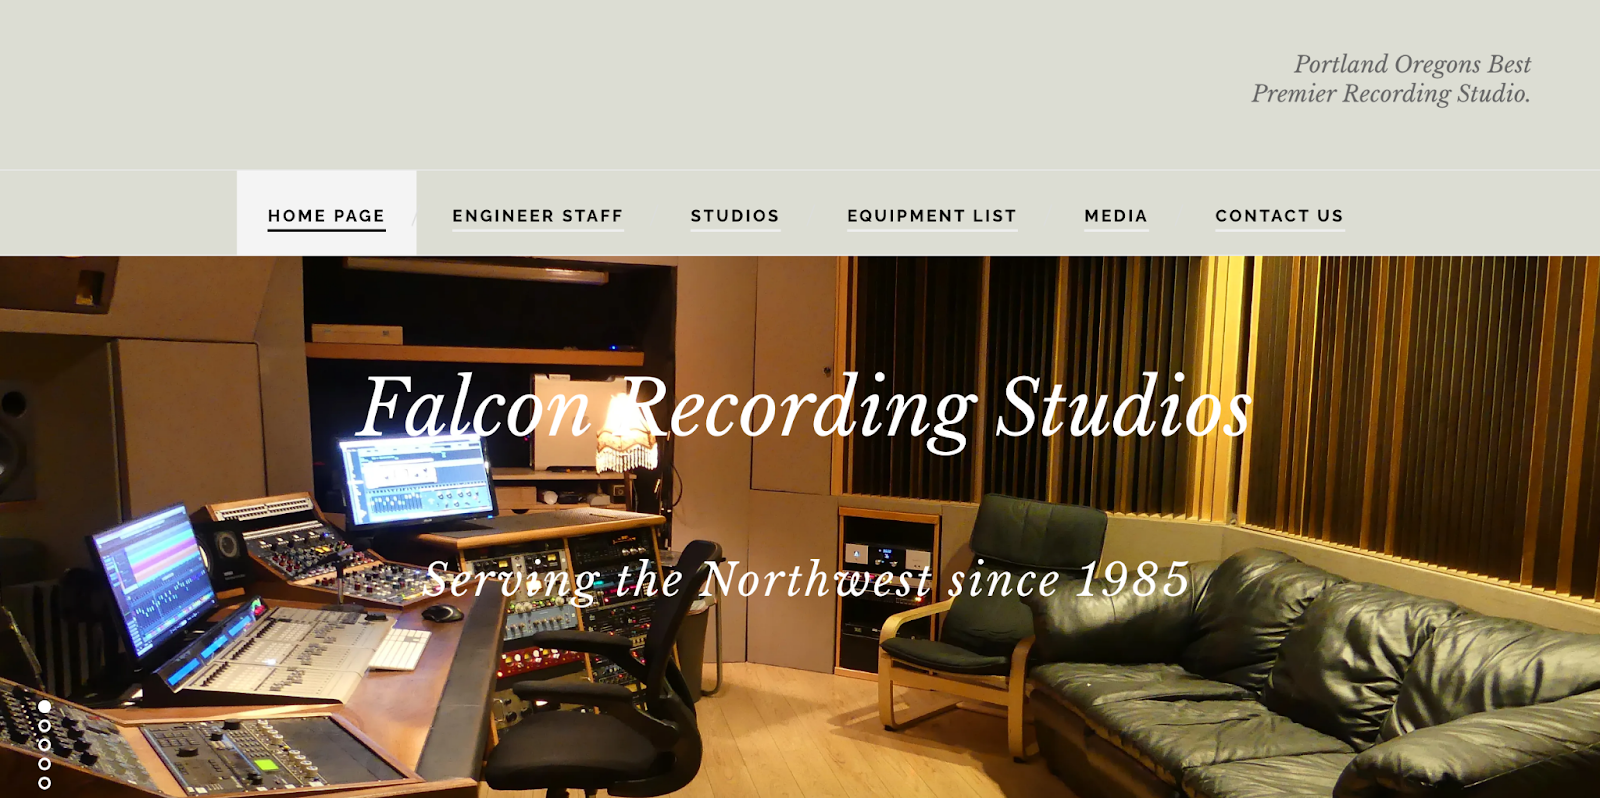 Falcon Recording studio One Of The Top 7 Best Recording Studios in Portland, Oregon